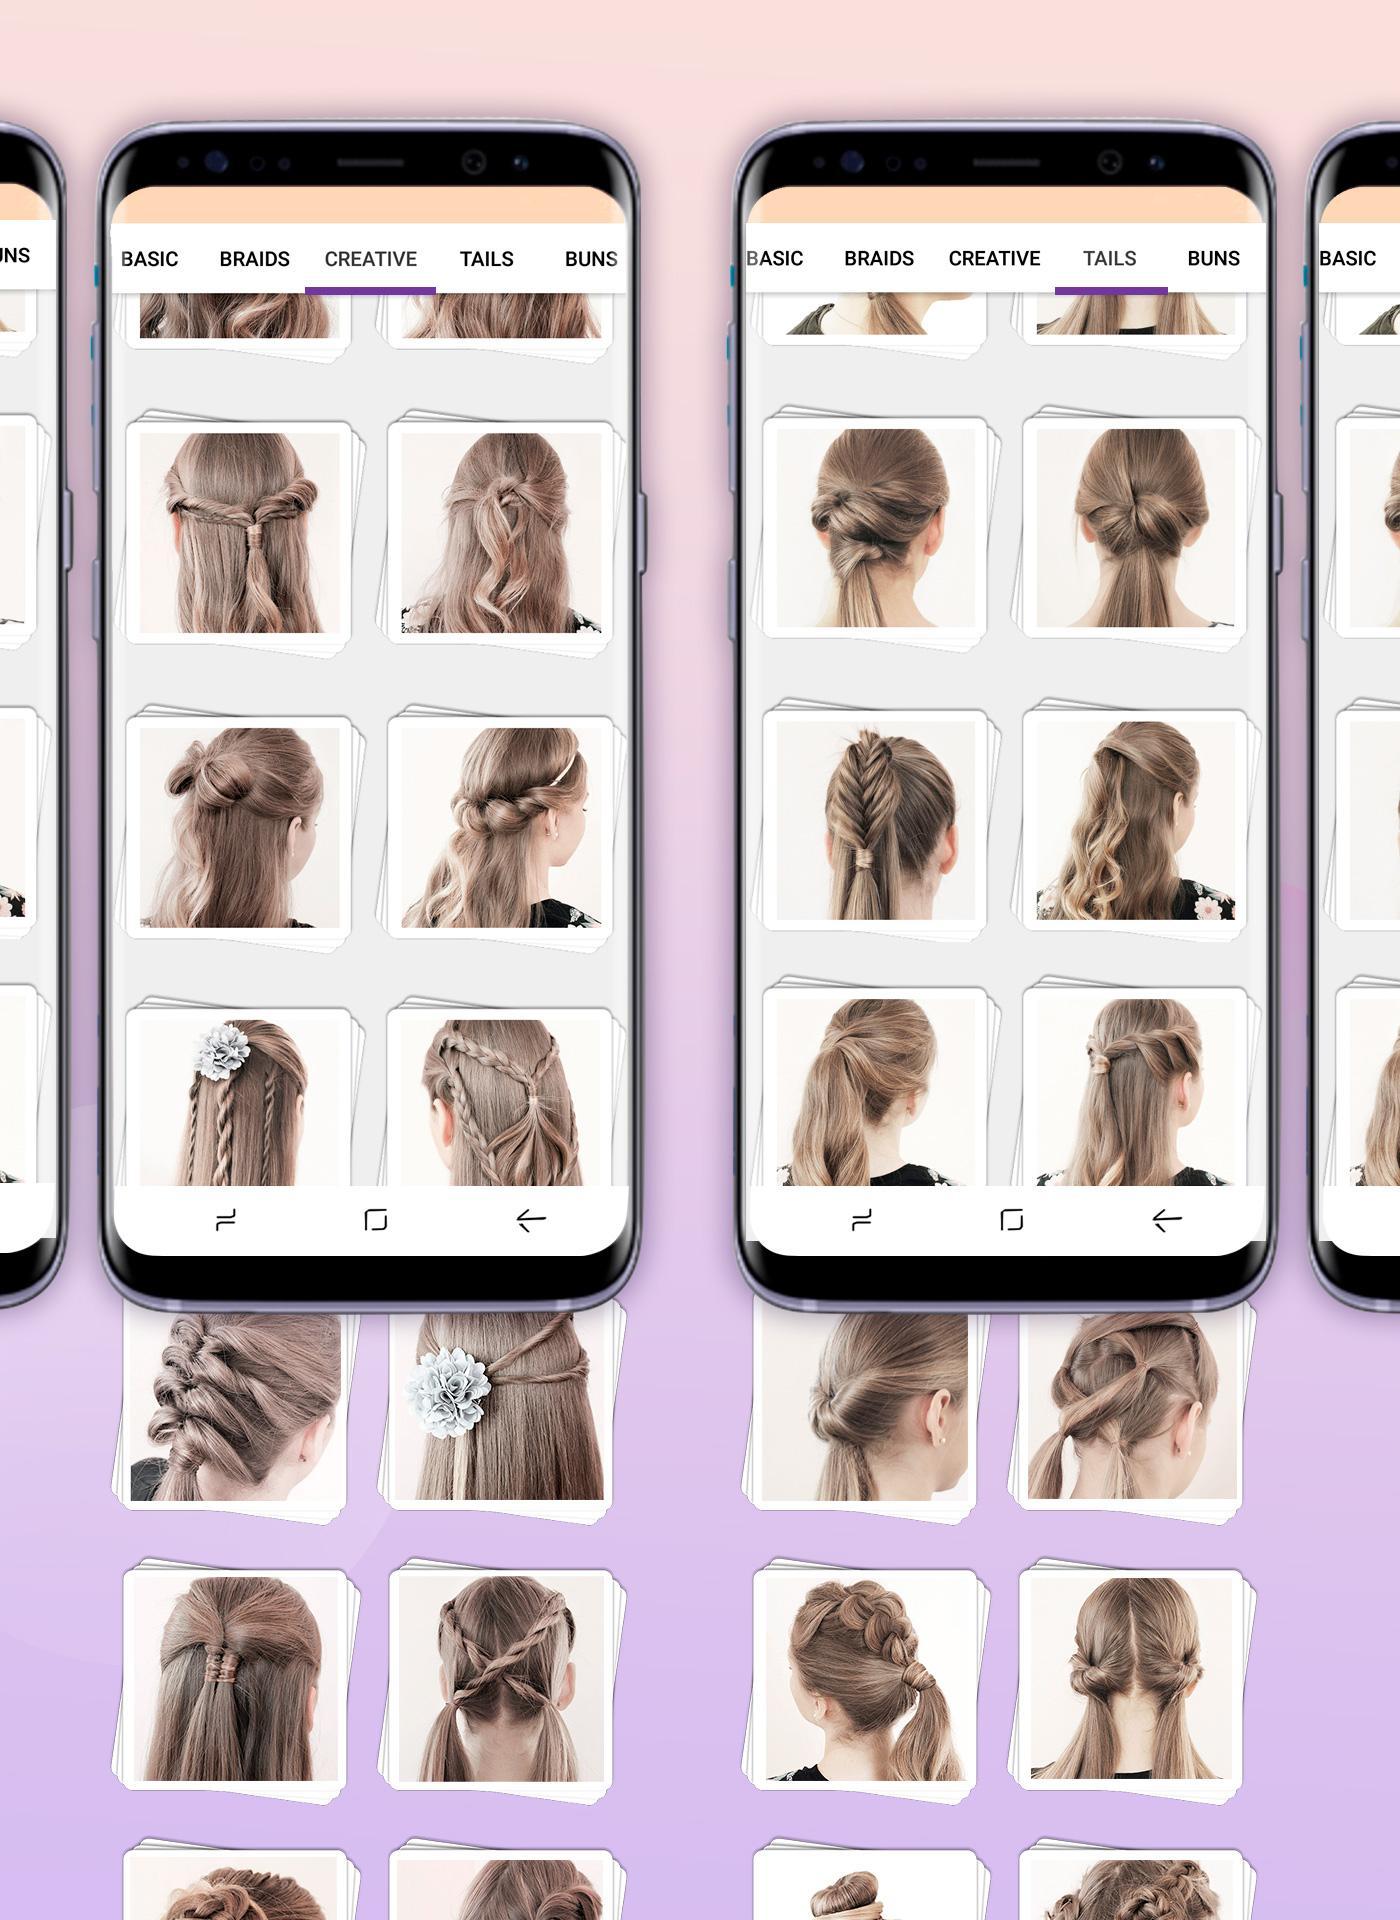 Hairstyles step by step 1.24.0.0 Screenshot 10